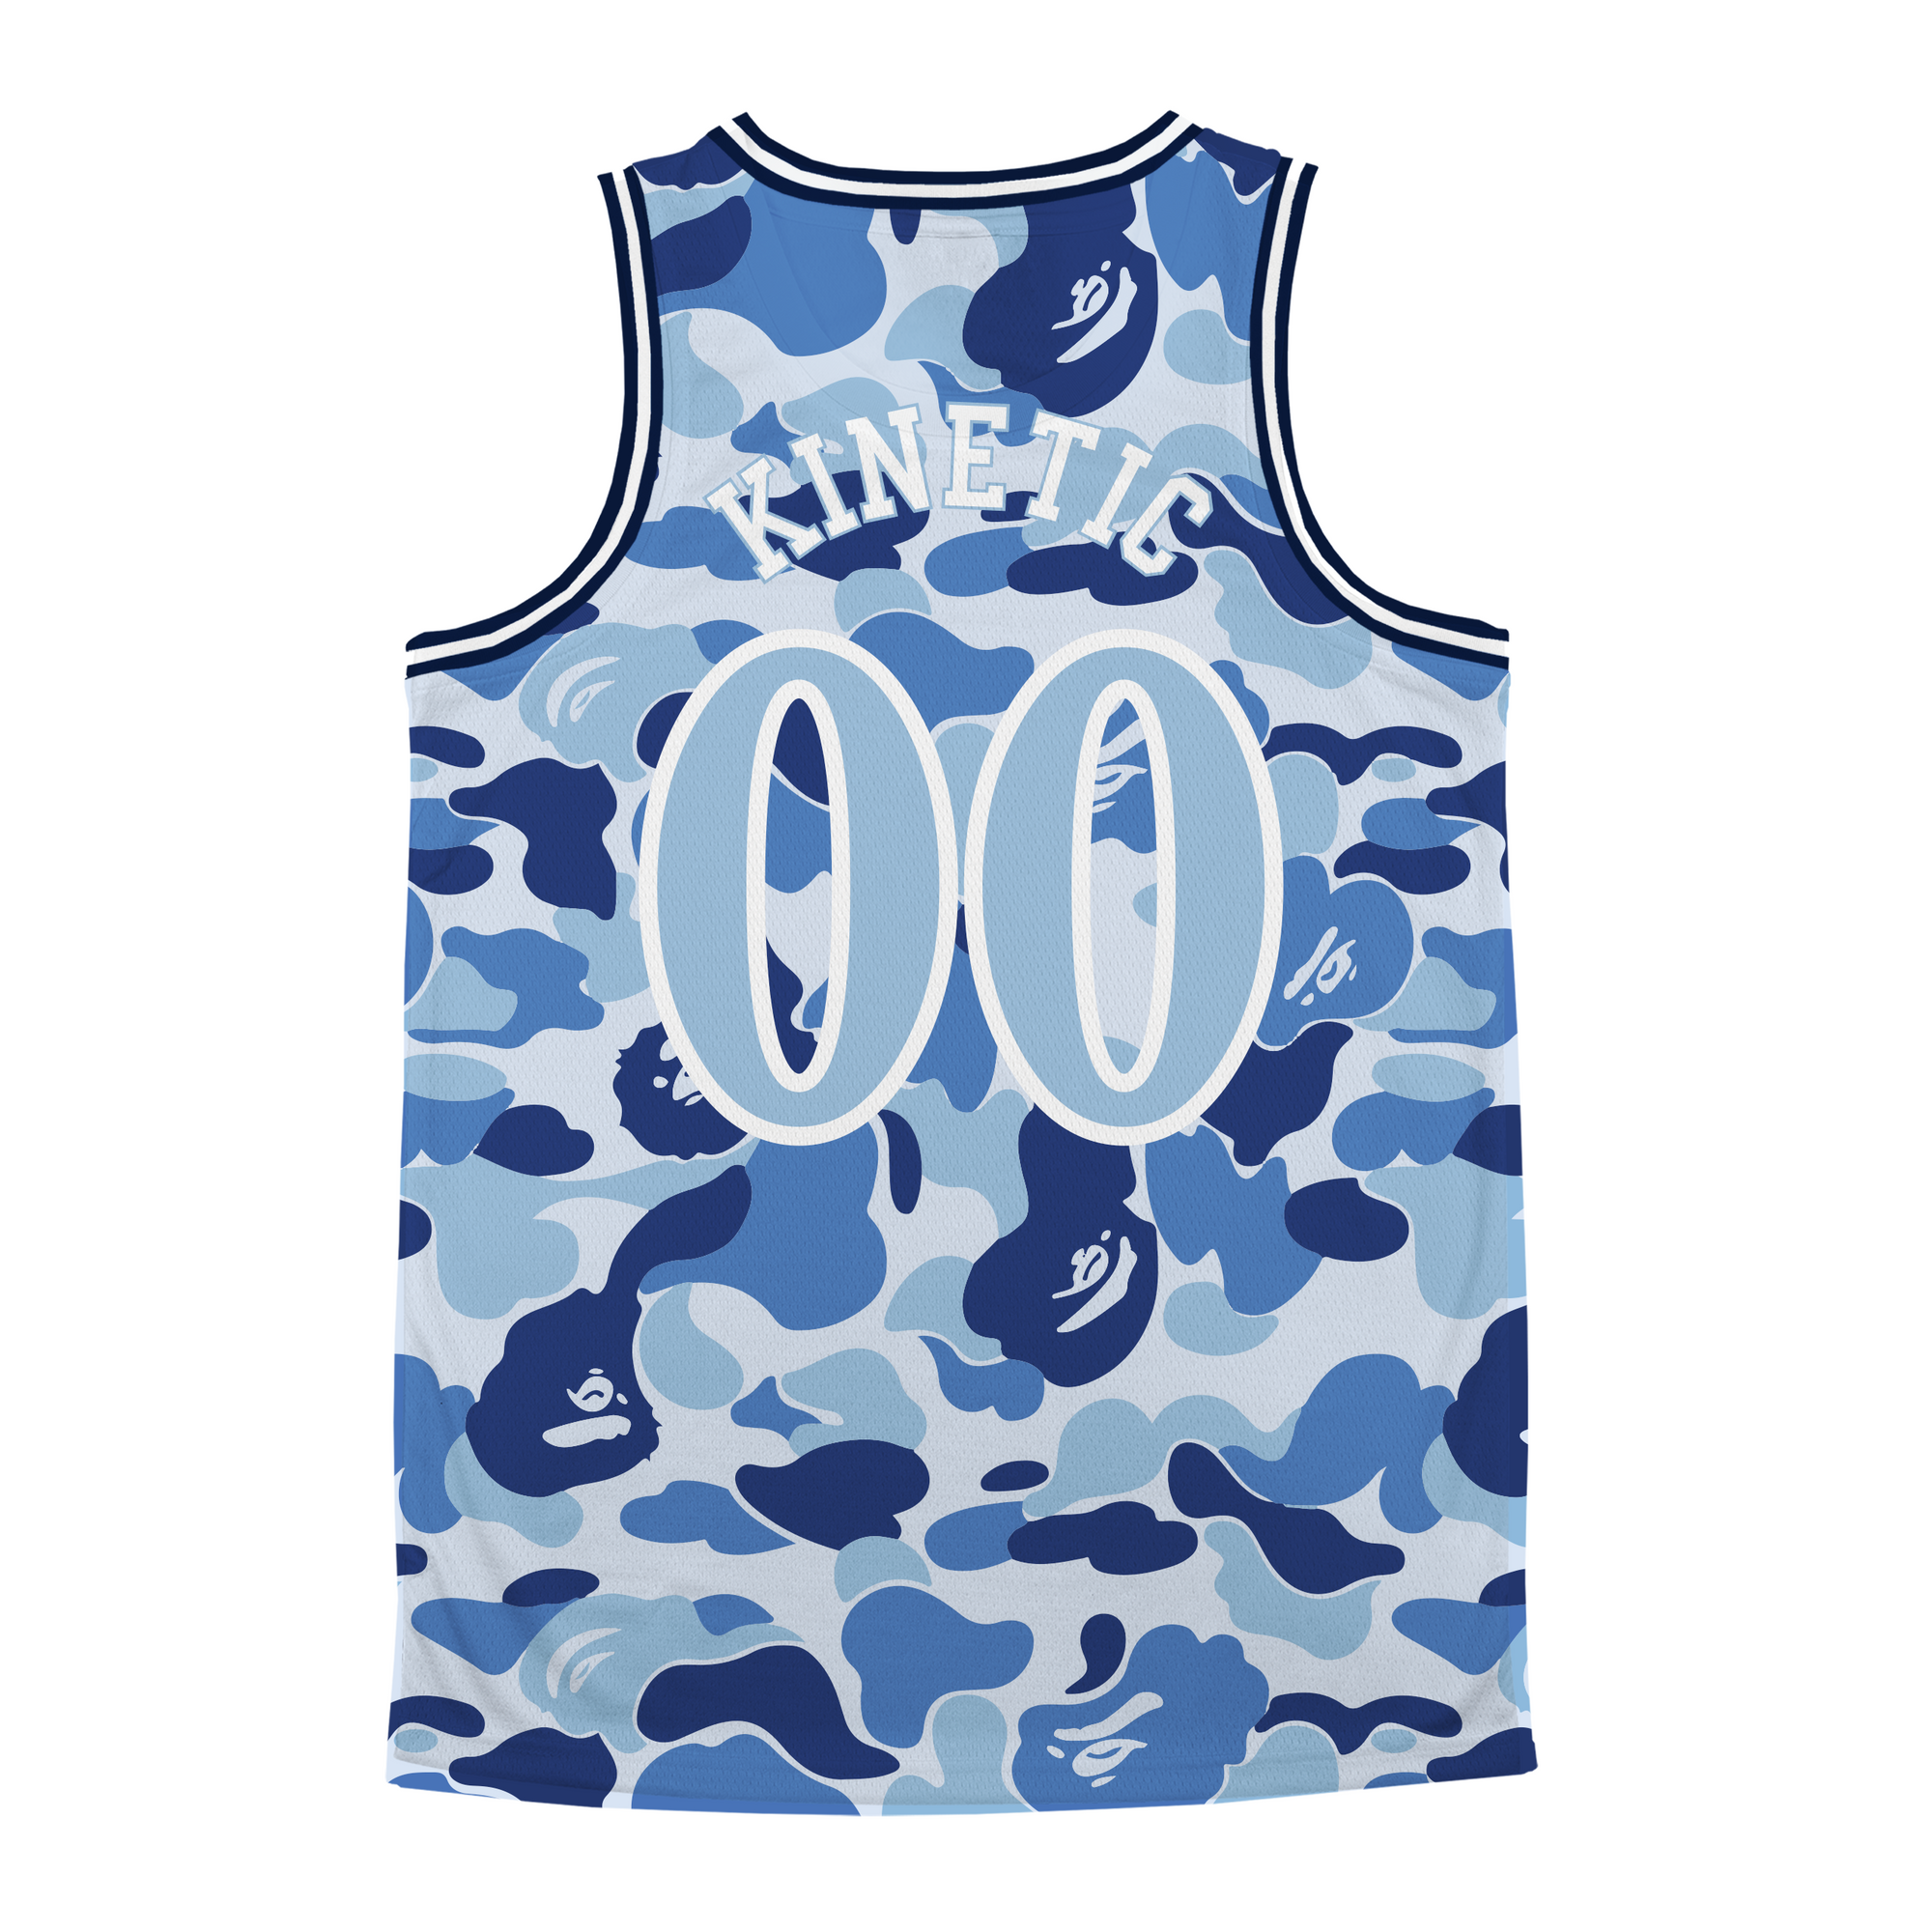 Delta Upsilon - Blue Camo Basketball Jersey